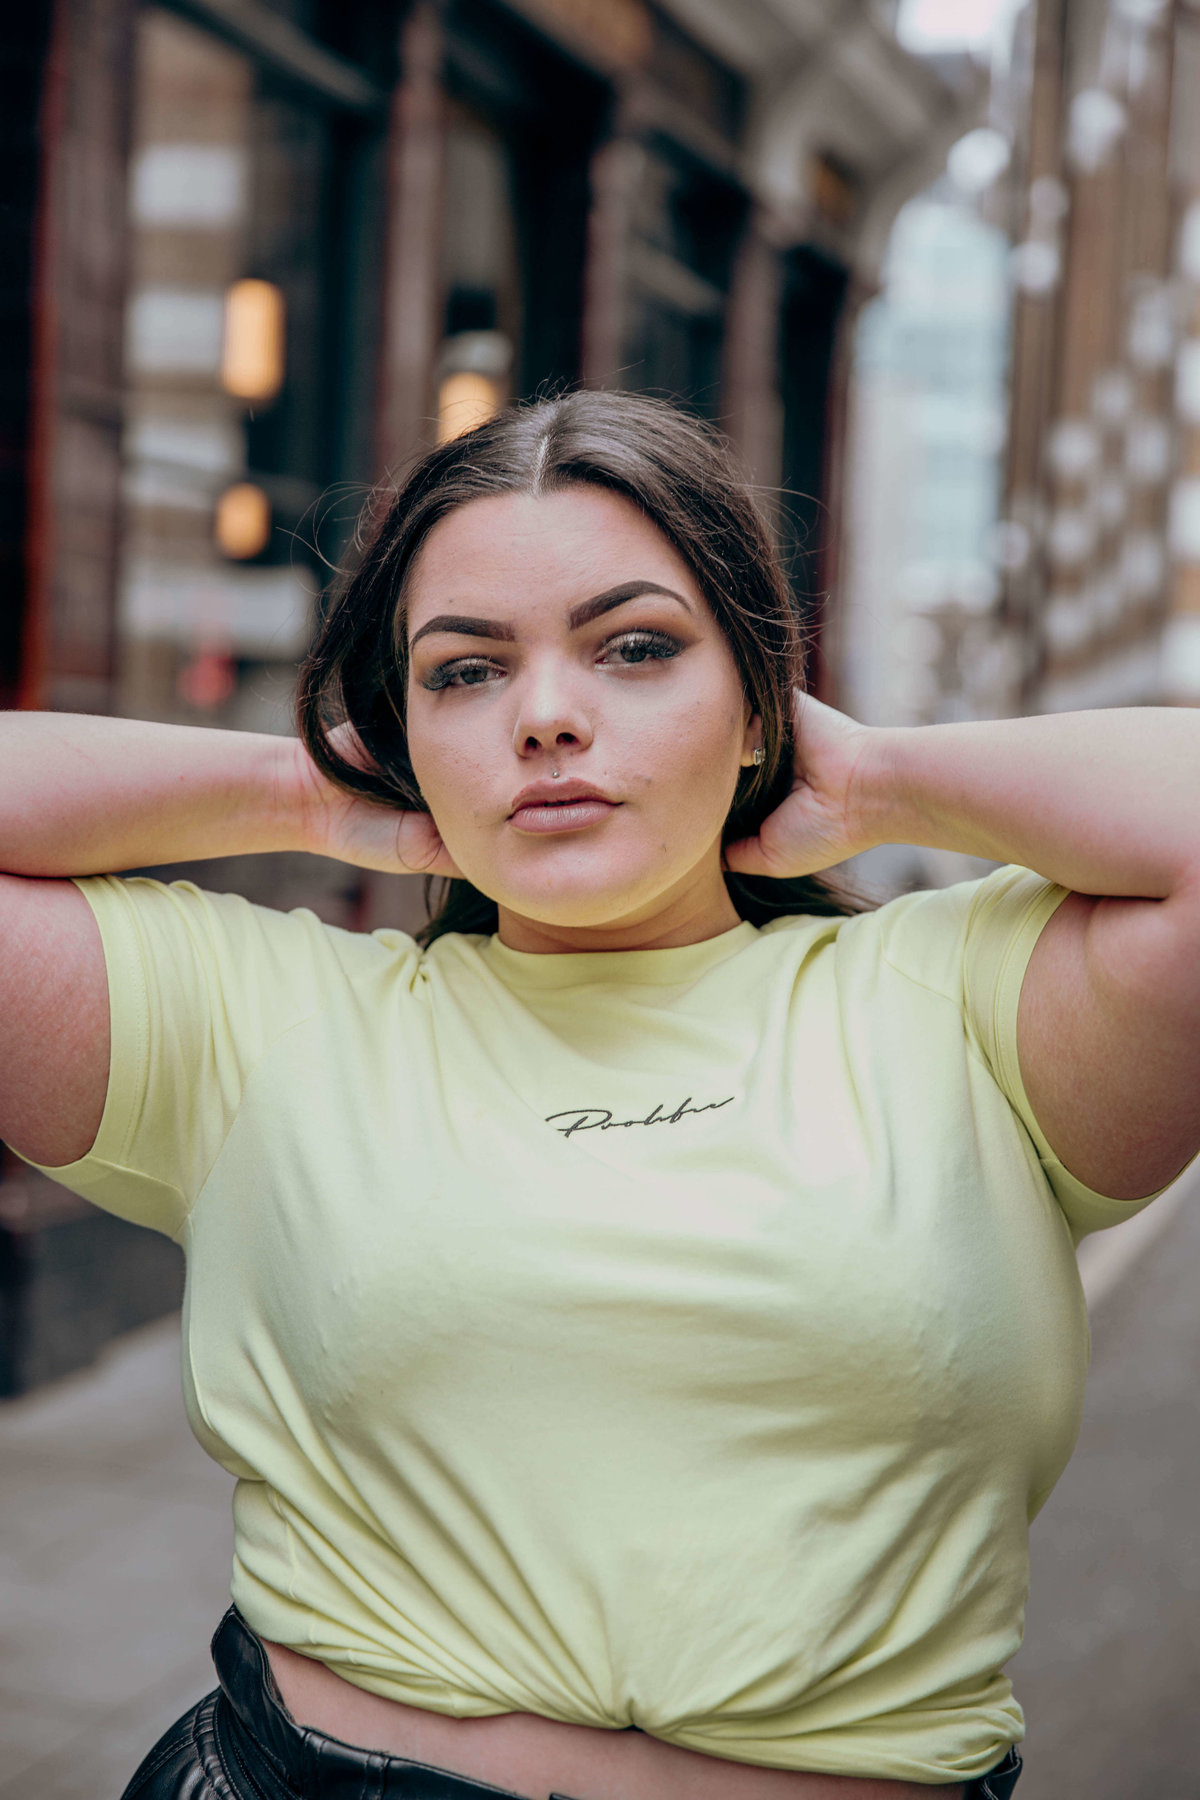 Tia wearing a neon t shirt, posing on the street in Shoreditch